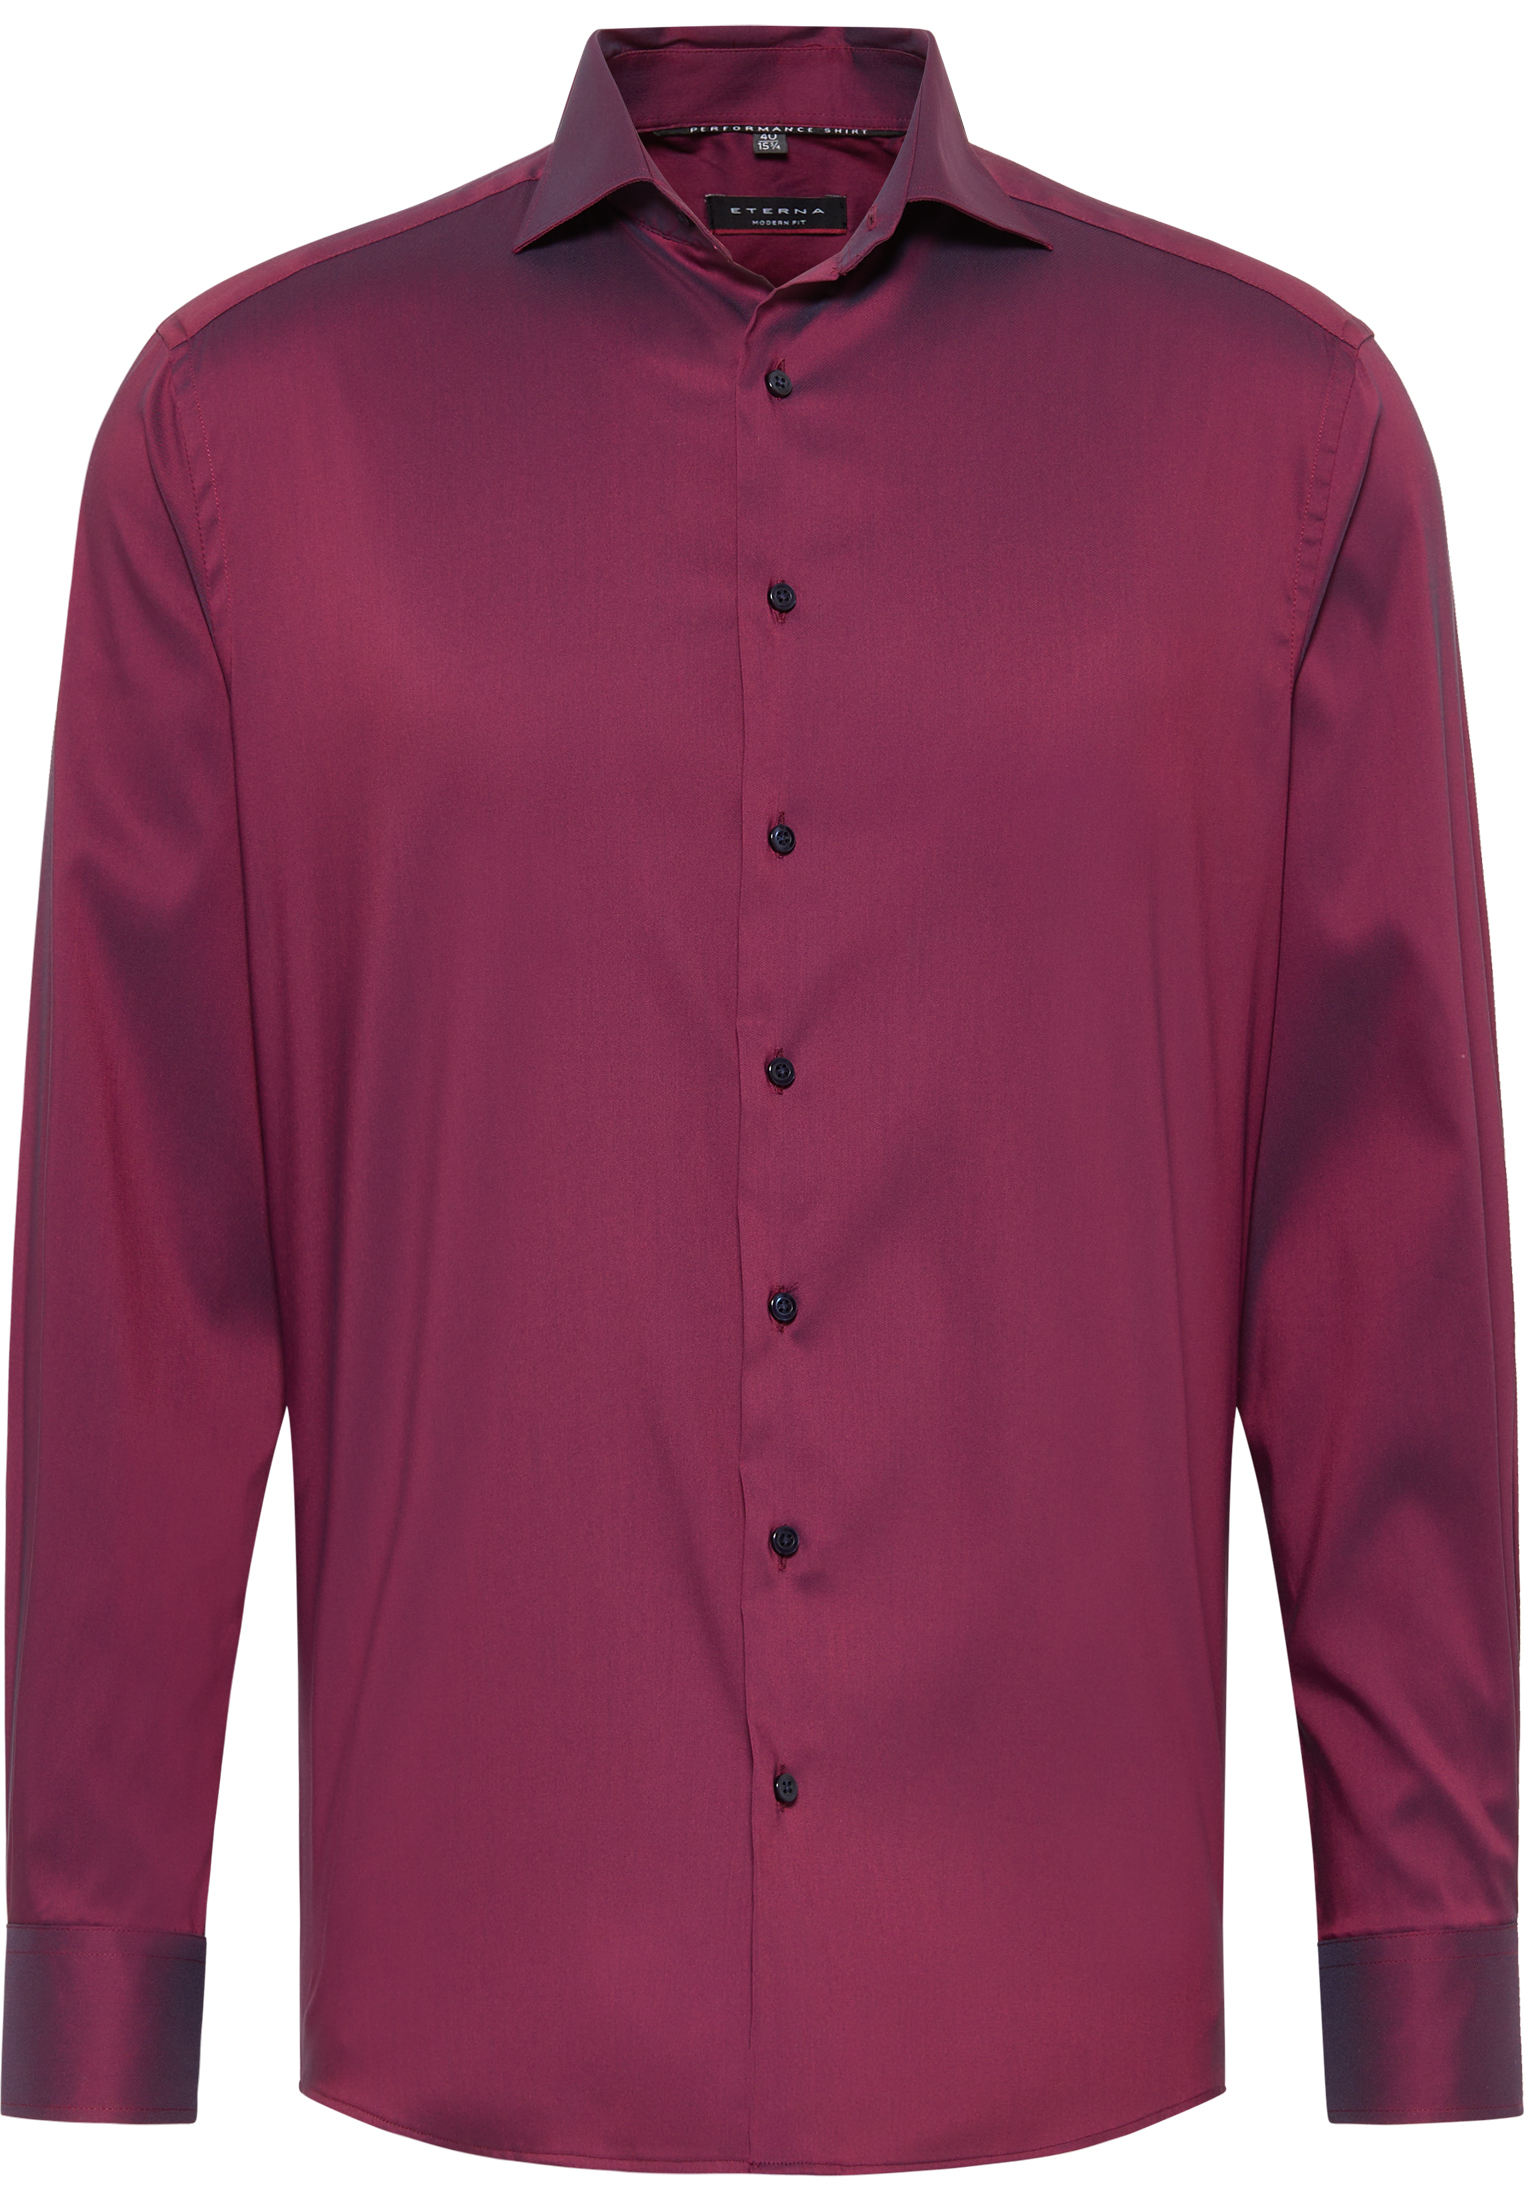 | Performance FIT | 1SH02224-05-81-48-1/1 | | burgunder Langarm in 48 MODERN unifarben burgunder Shirt